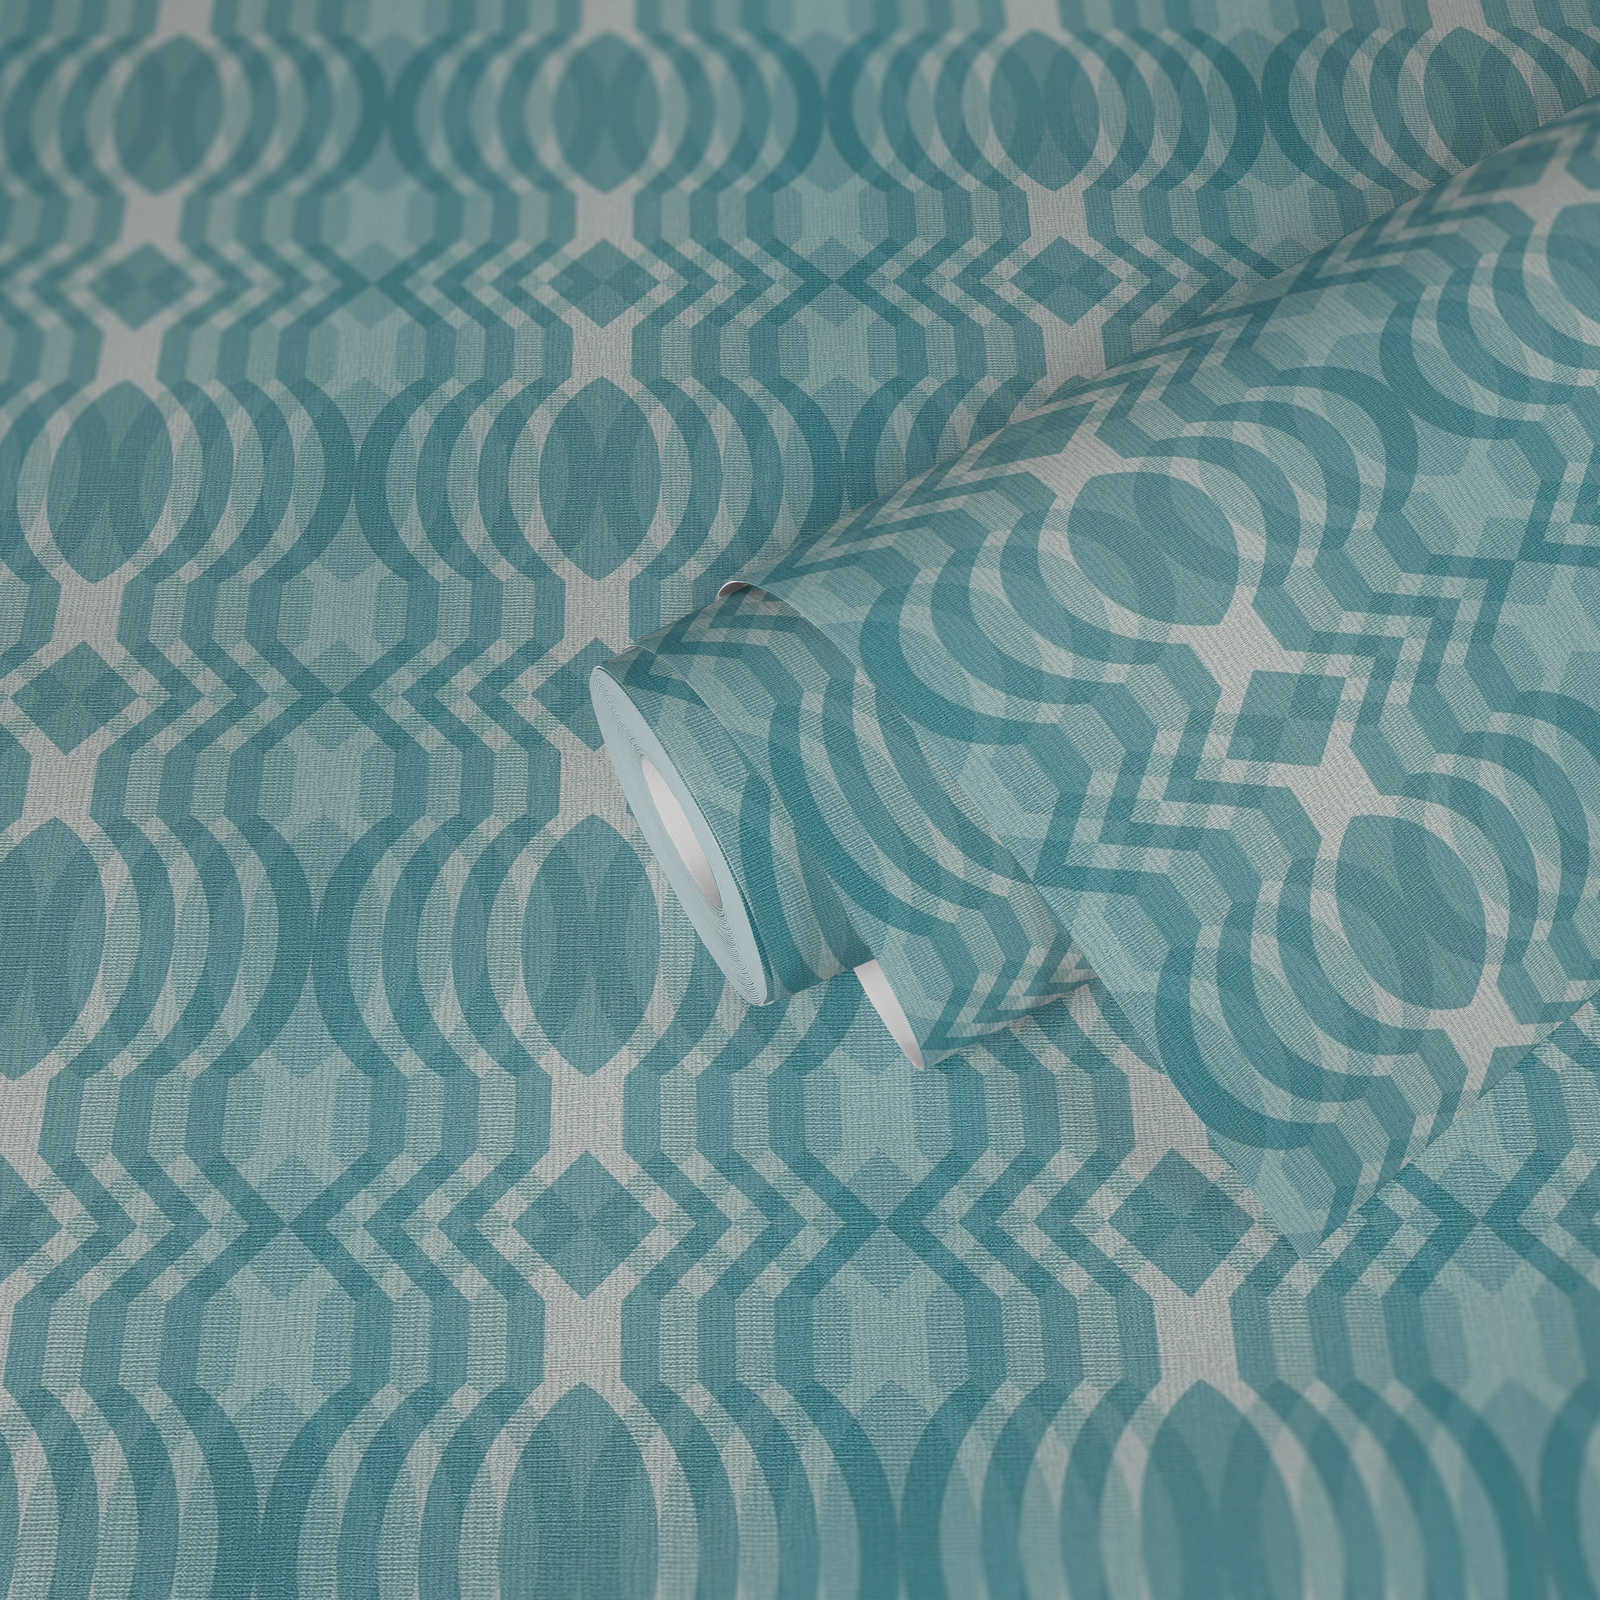             Retro wallpaper with geometric pattern - blue, cream, white
        